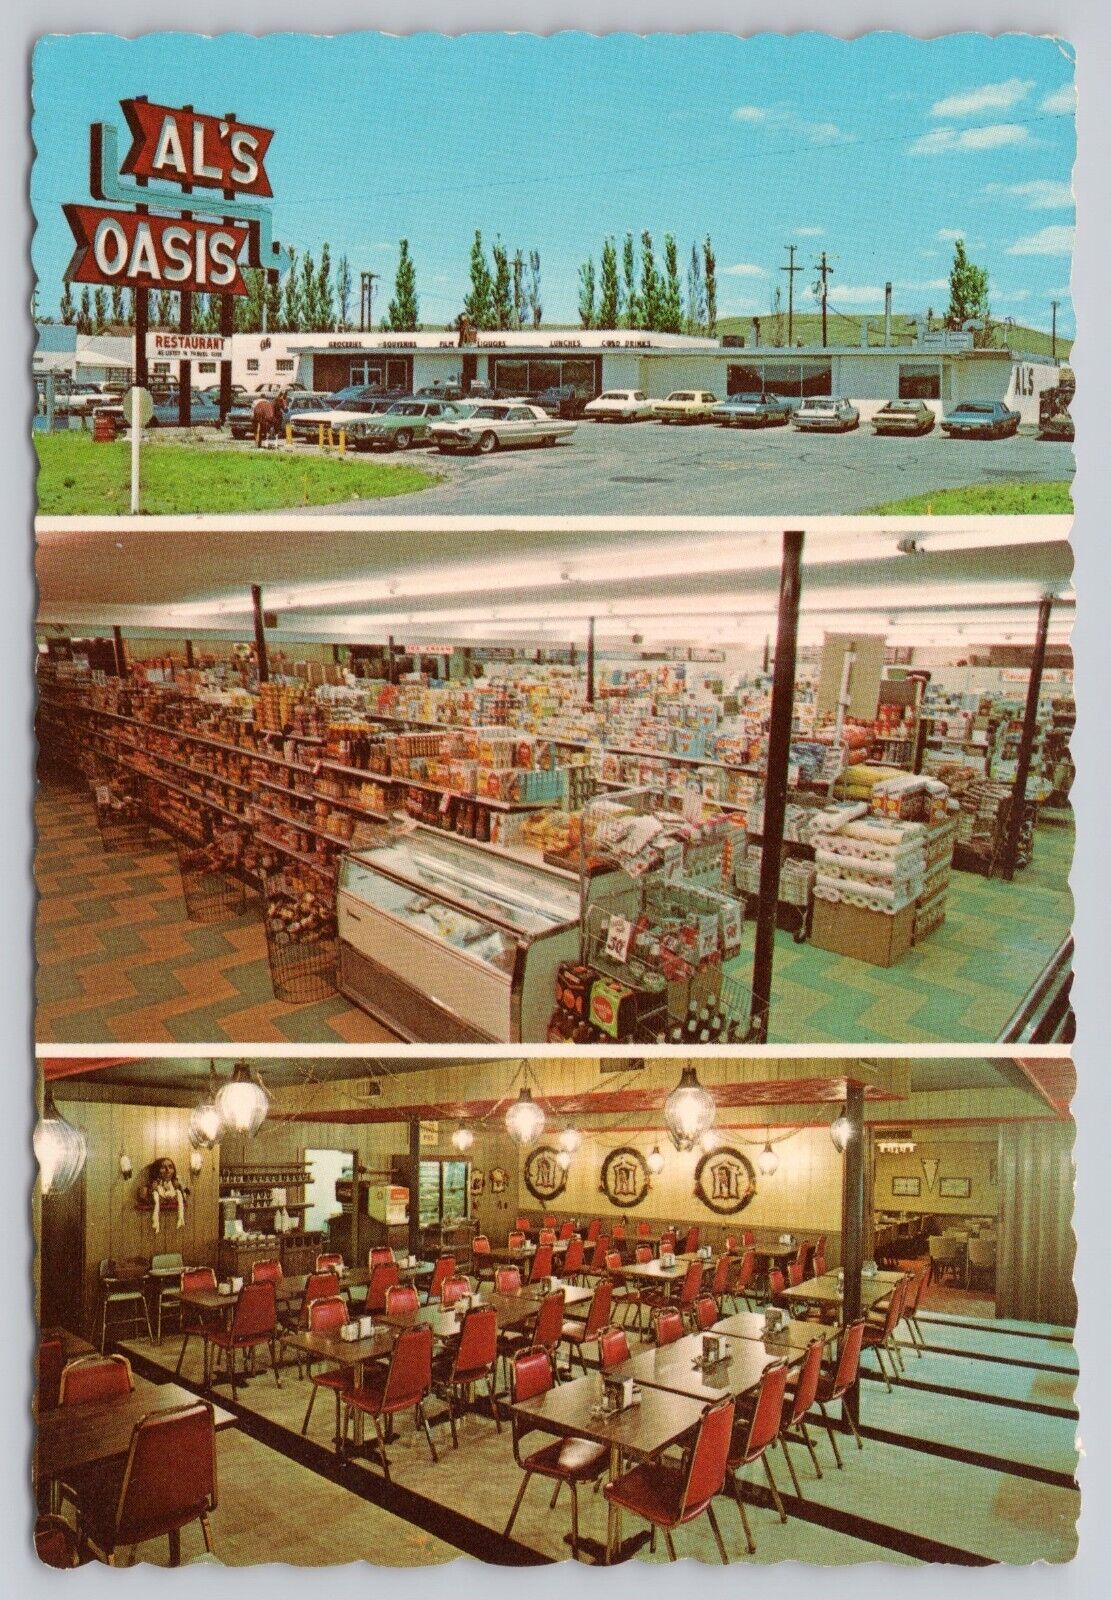 Chamberlain South Dakota, Al\'s Oasis, Advertising, Vintage Postcard